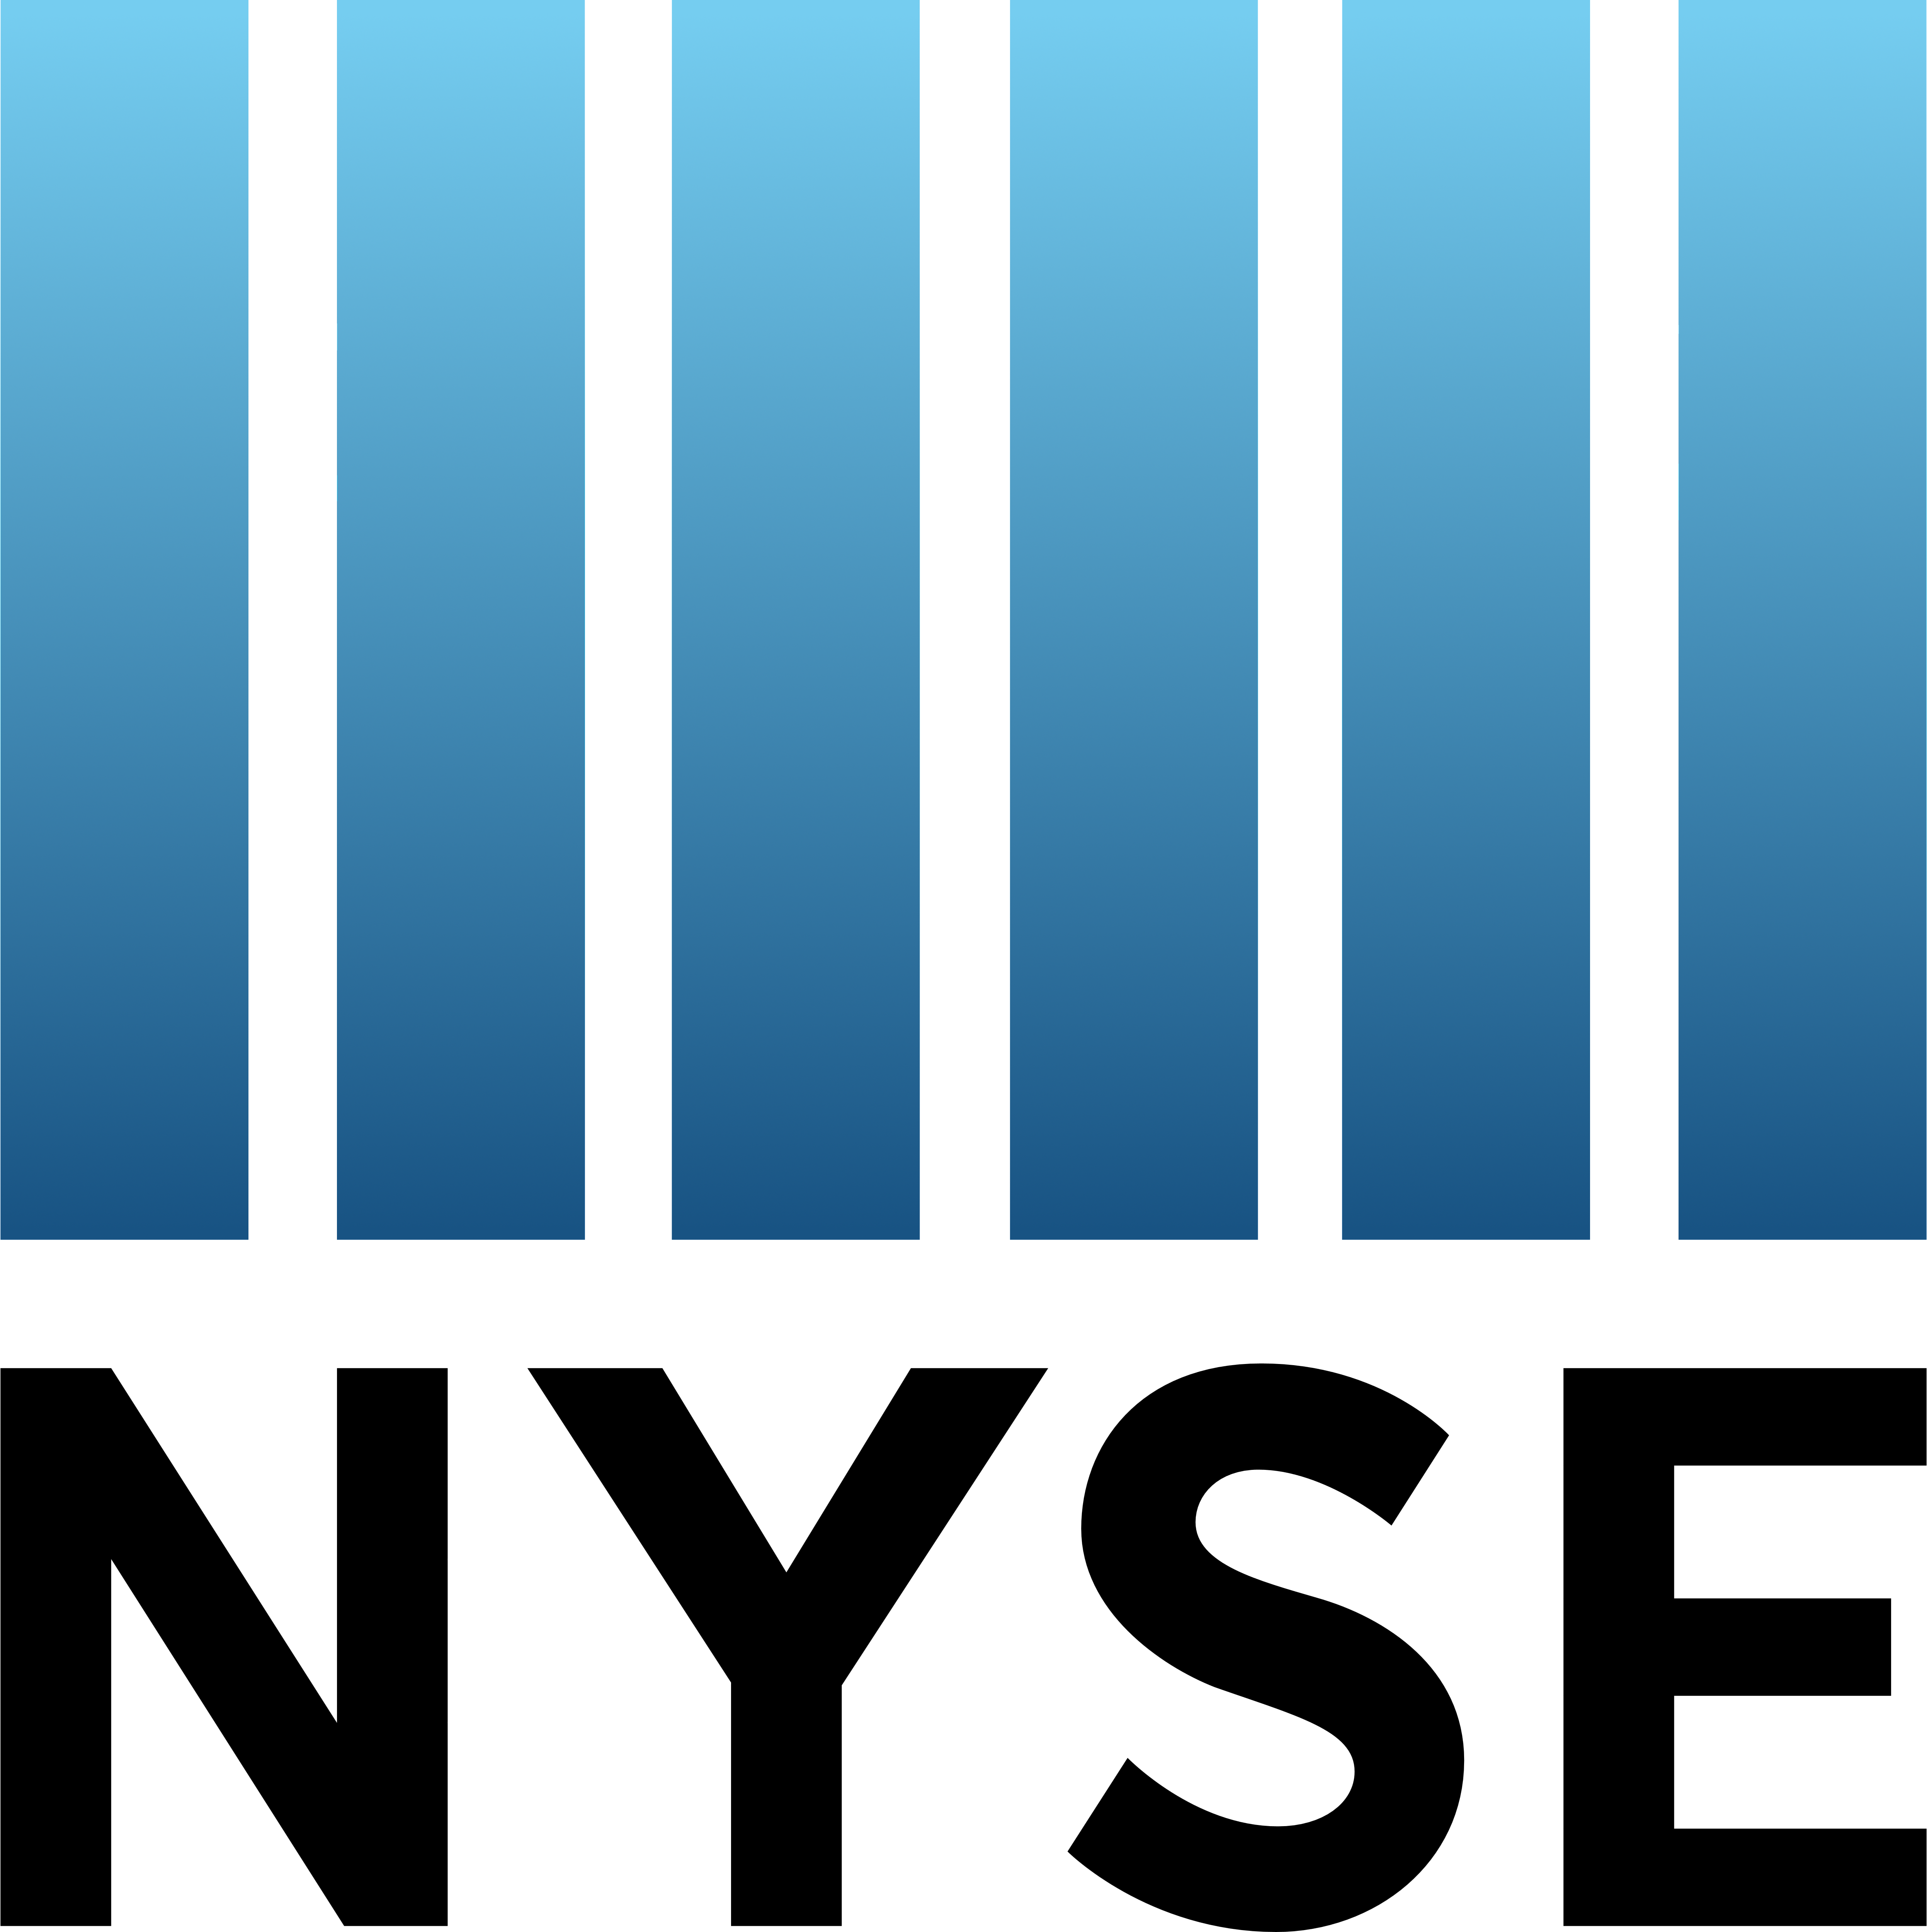 NYSE - New York Stock Exchange - Нью-Йоркская фондовая биржа